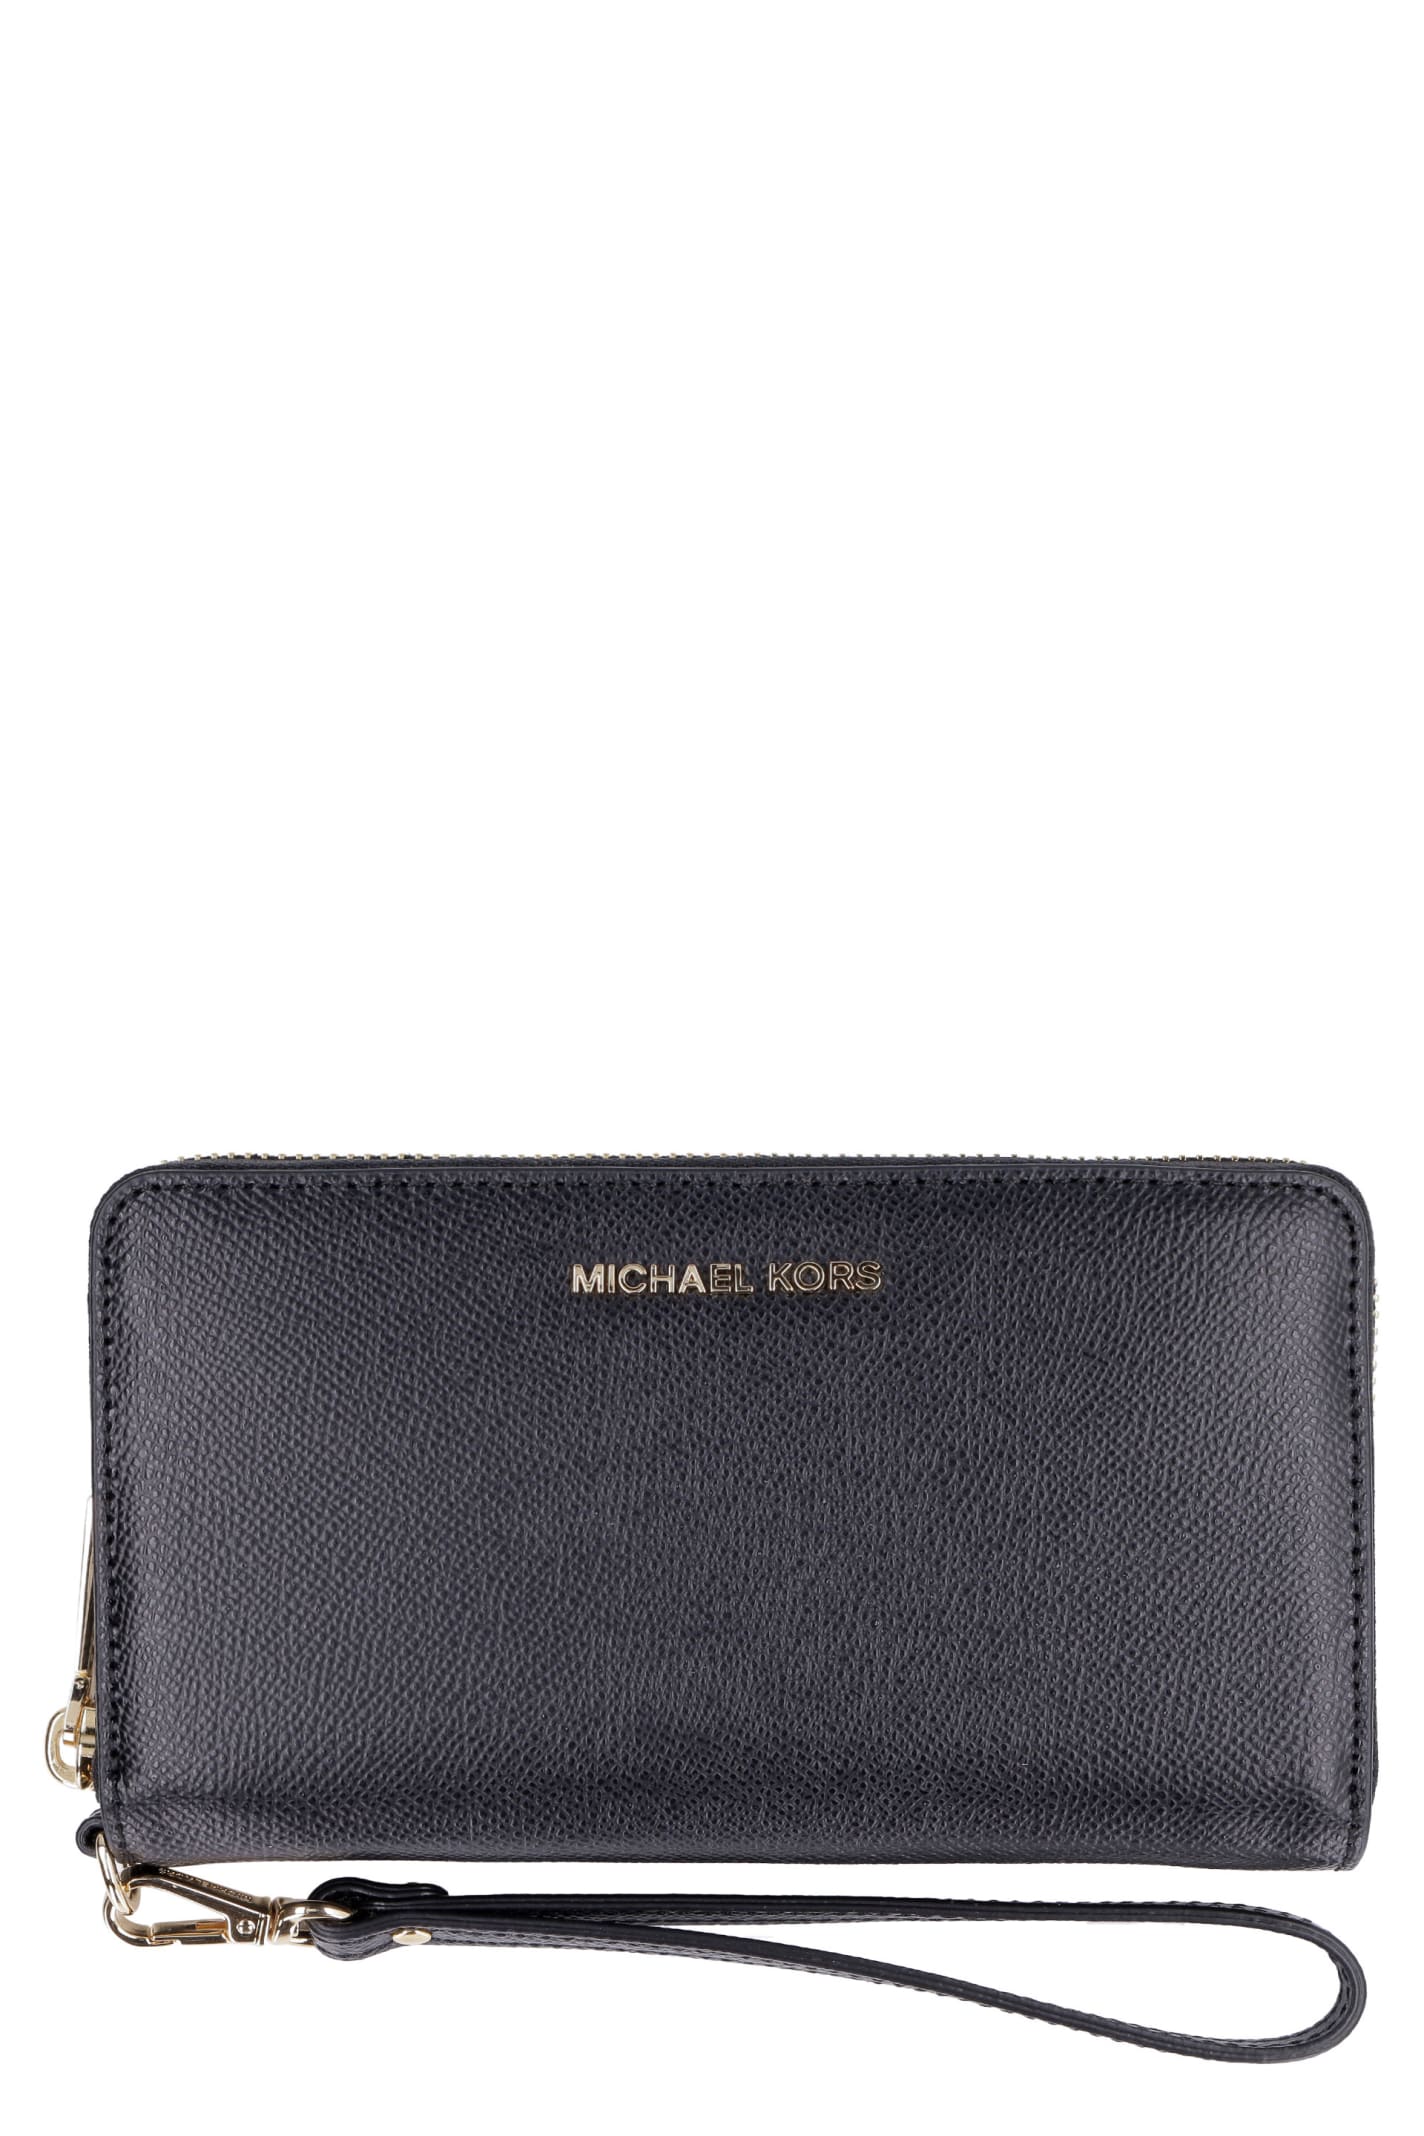 Michael Kors Logo Leather Wallet